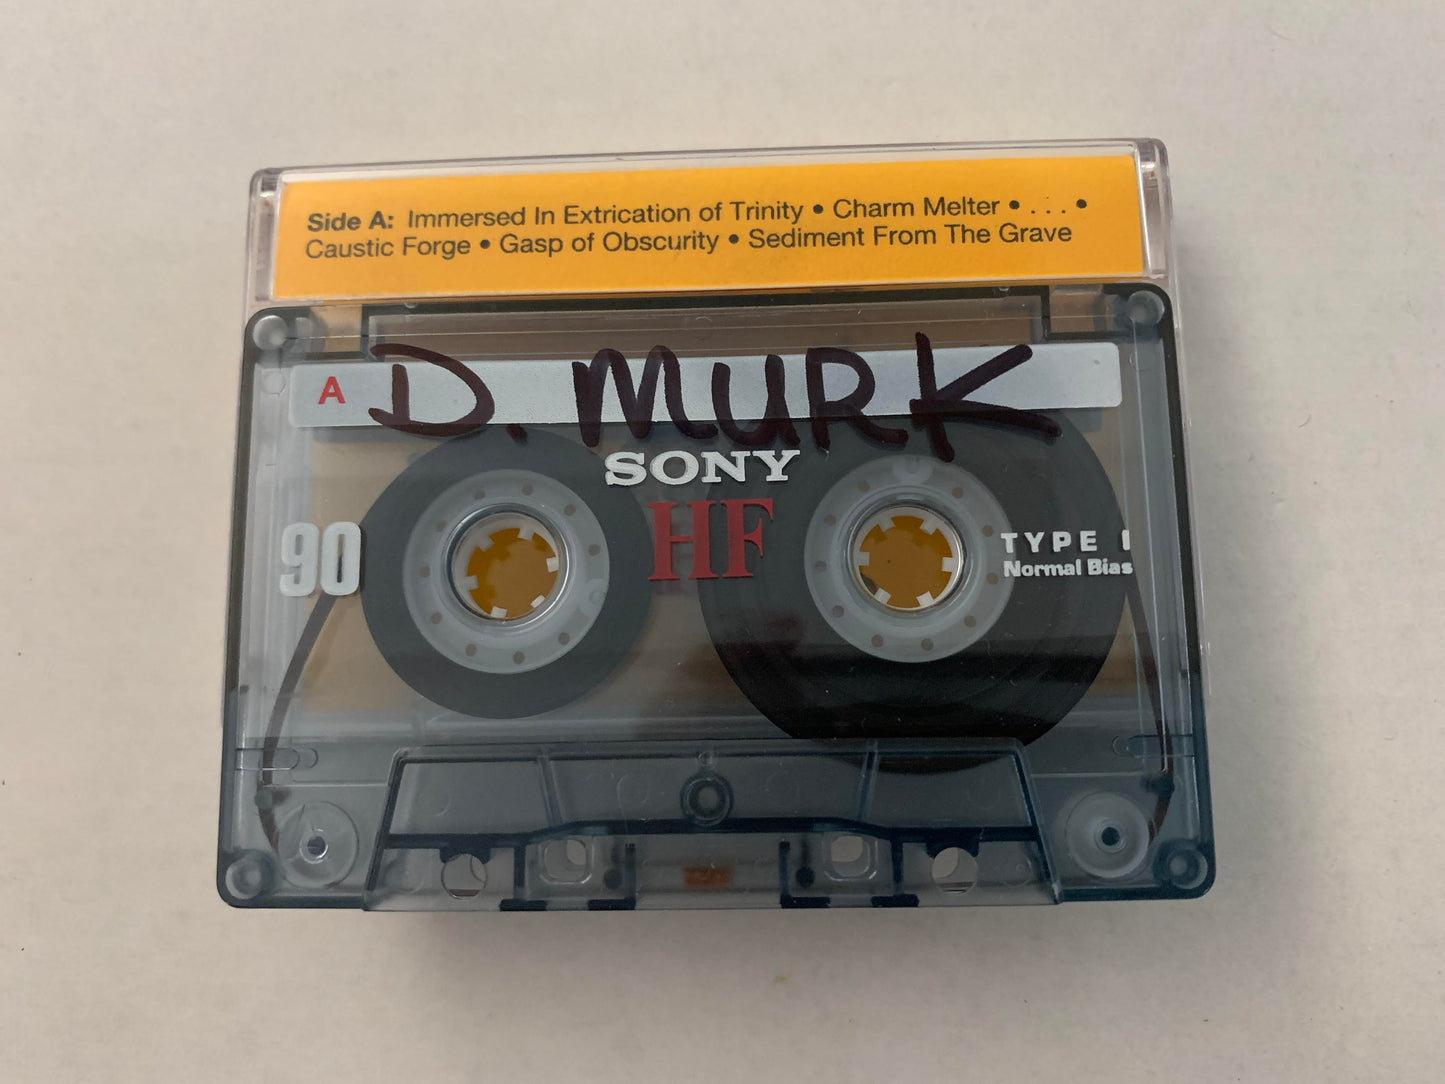 Disparaging Murk - Articulation of Ancient Tongues [Black Metal] (Self-Released - Tape - 8/15/18)